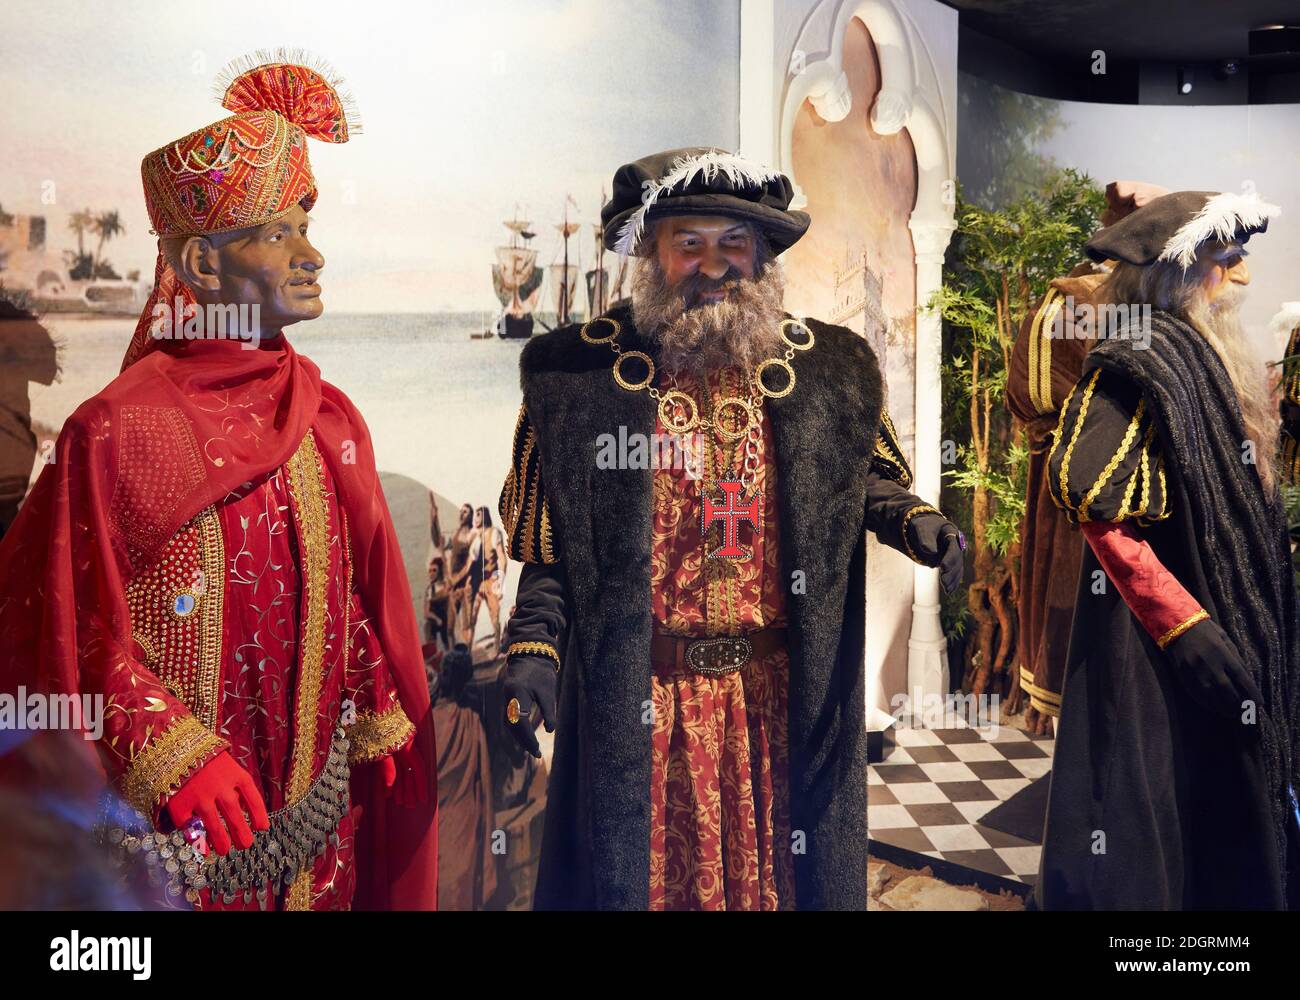 Historical figures of Samorim and Vasco da Gama in The Wax Museum of the Portuguese Discoveries, Lagos, Algarve, Portugal Stock Photo